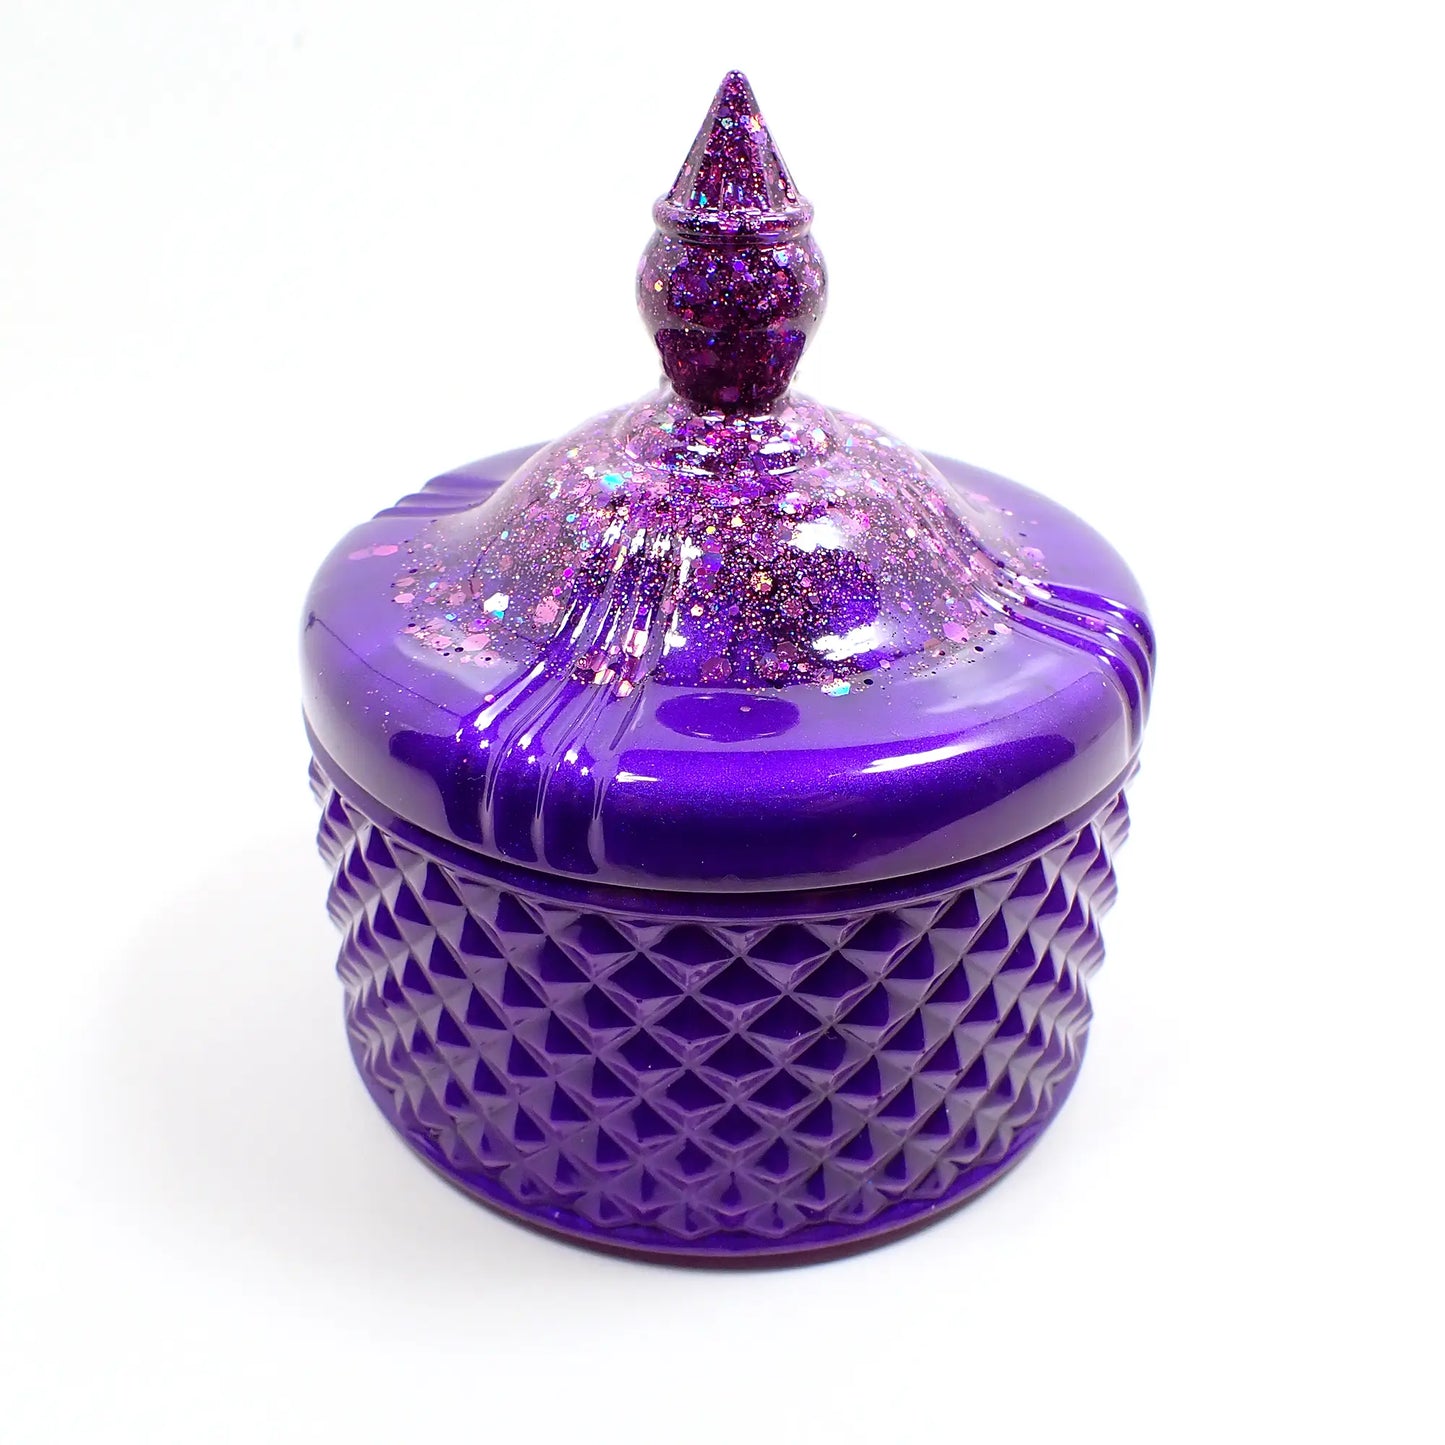 Handmade Pearly Bright Purple Trinket Box Candy Dish with Iridescent Glitter